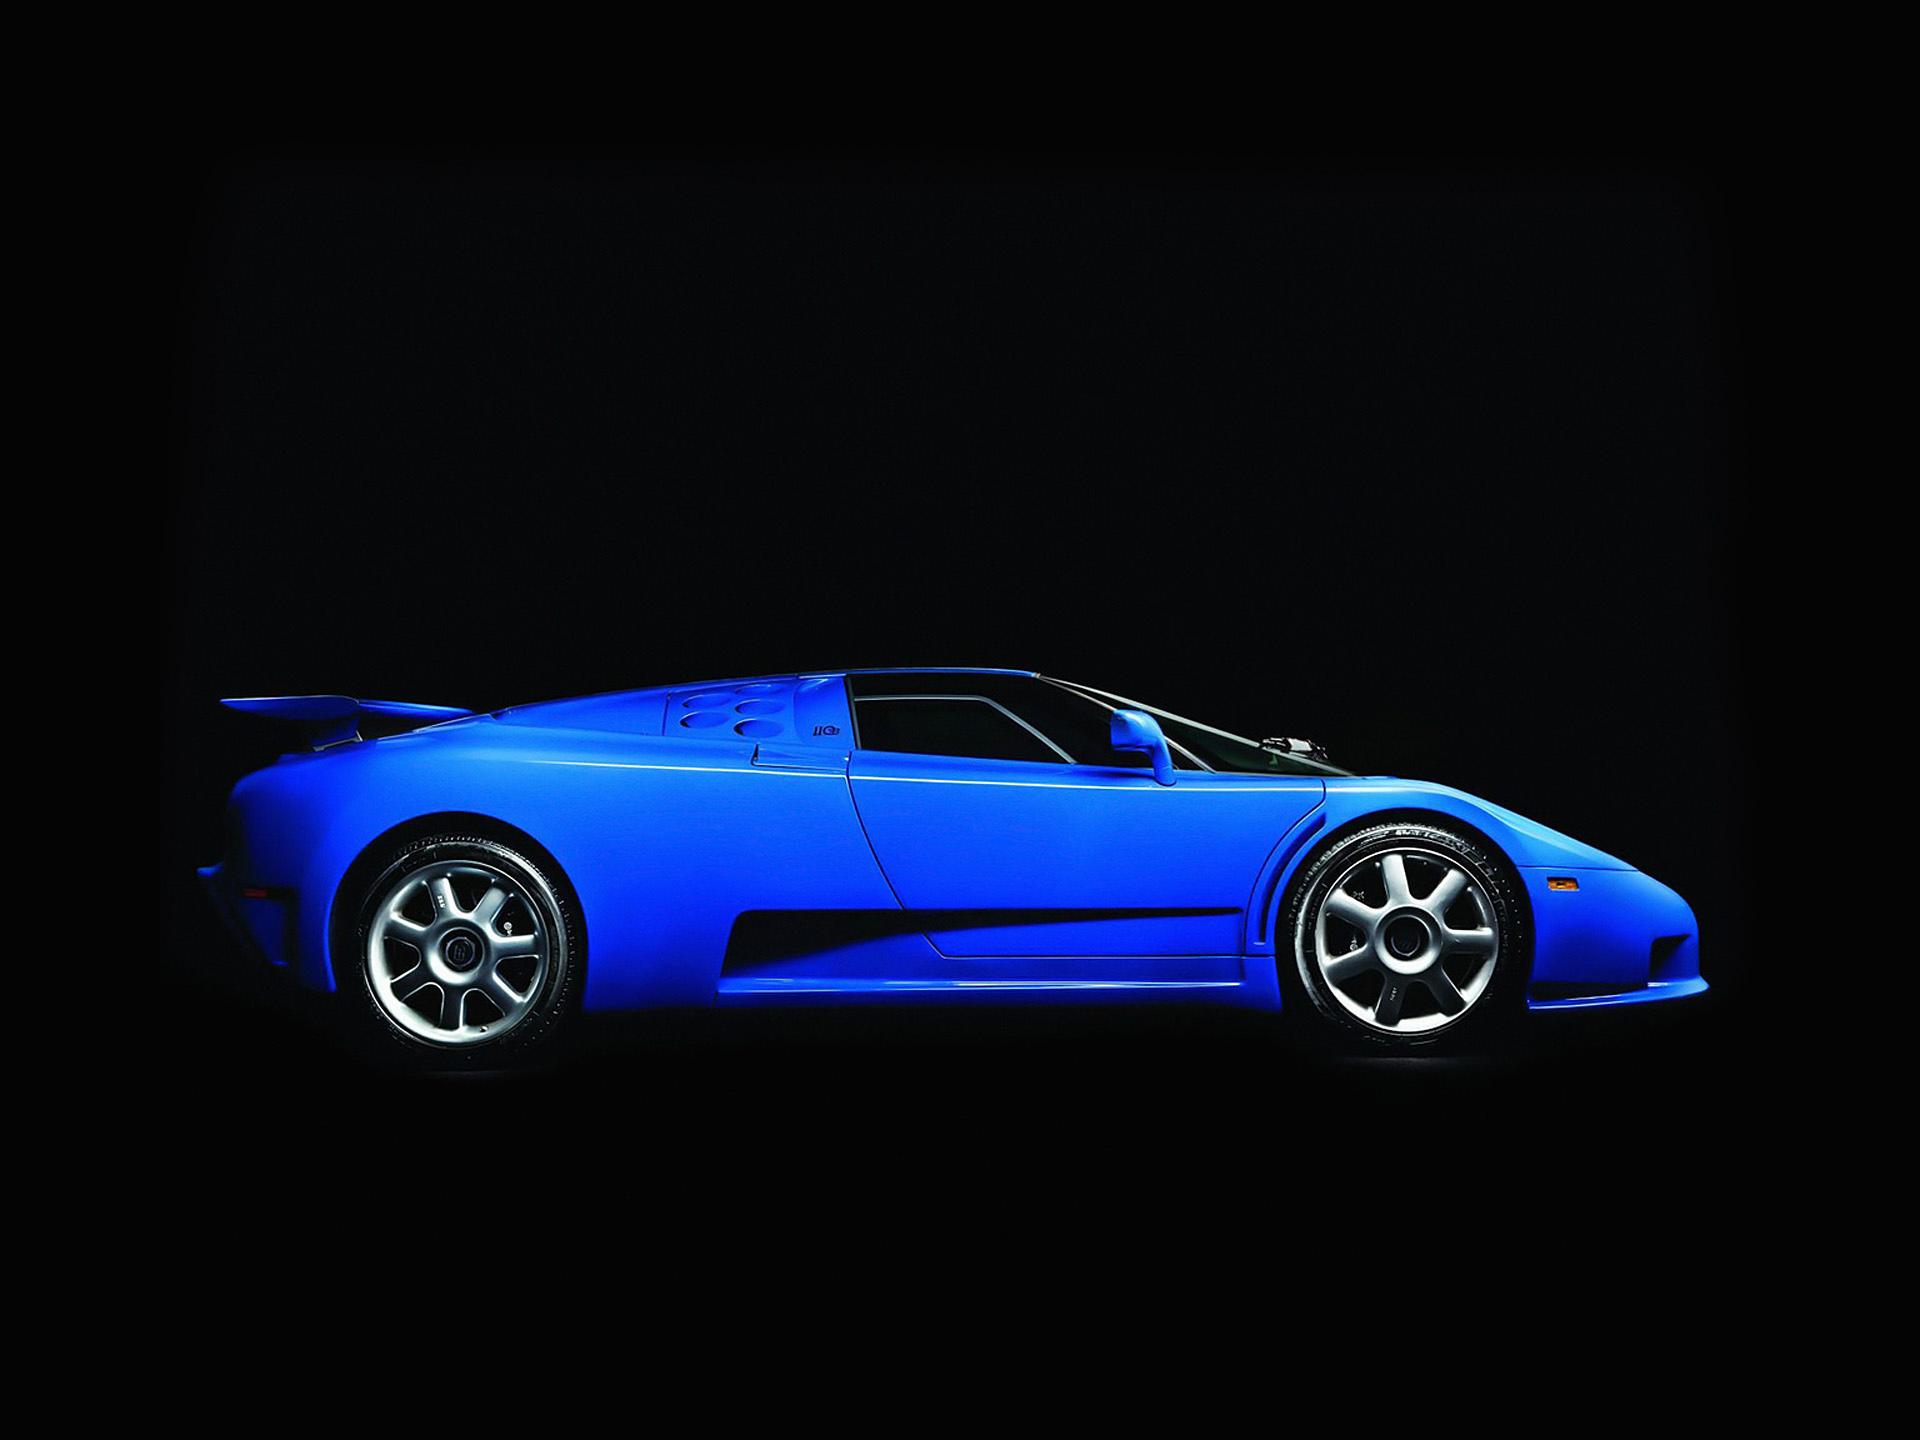 Bugatti EB110 GT at 1600 x 1200 size wallpapers HD quality